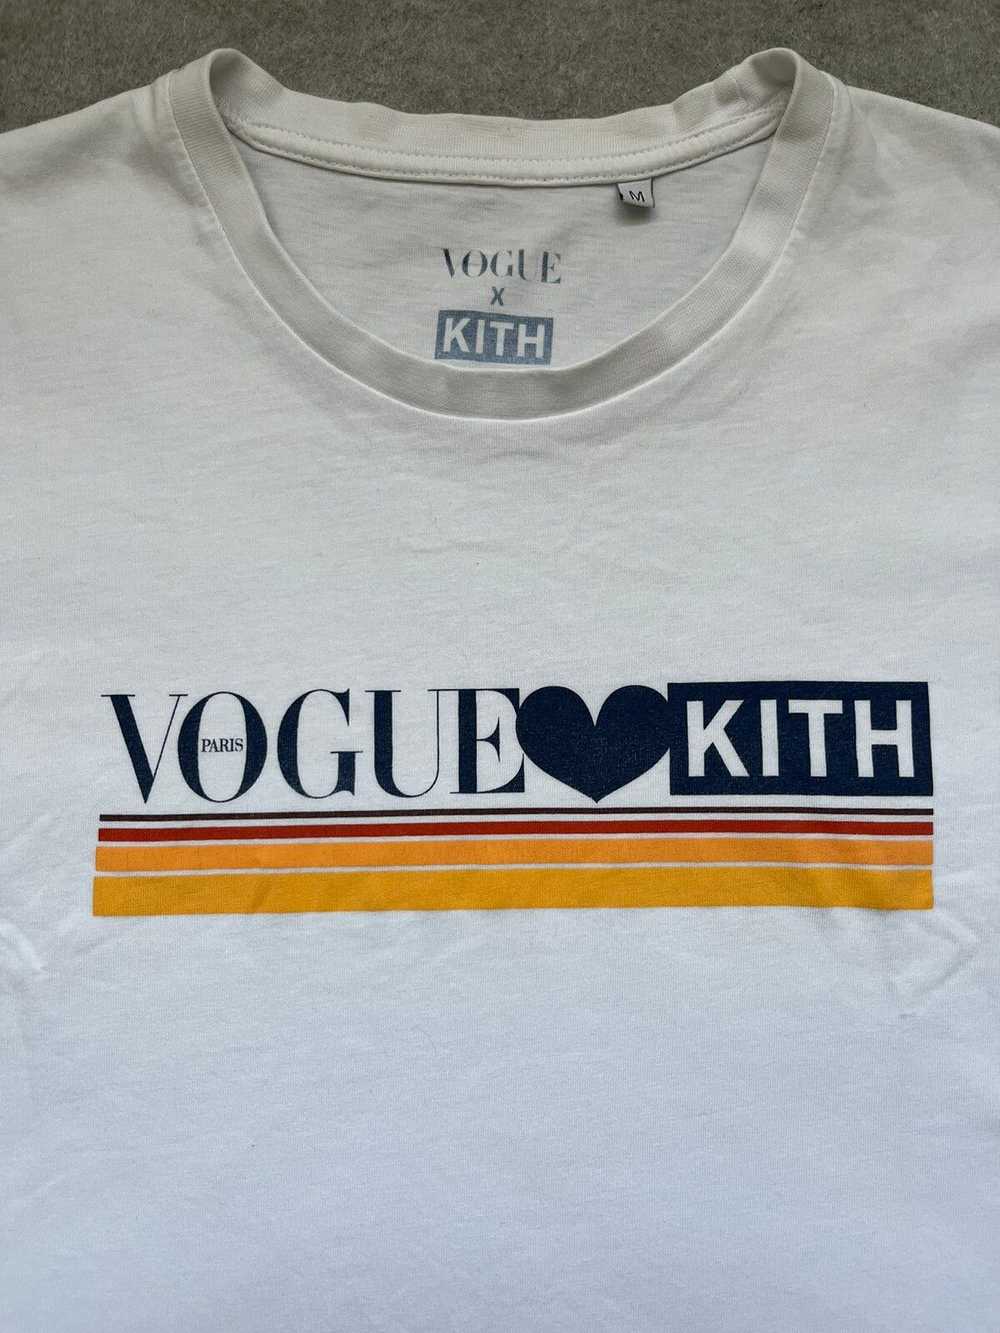 Kith Kith x Vogue Tee - image 3